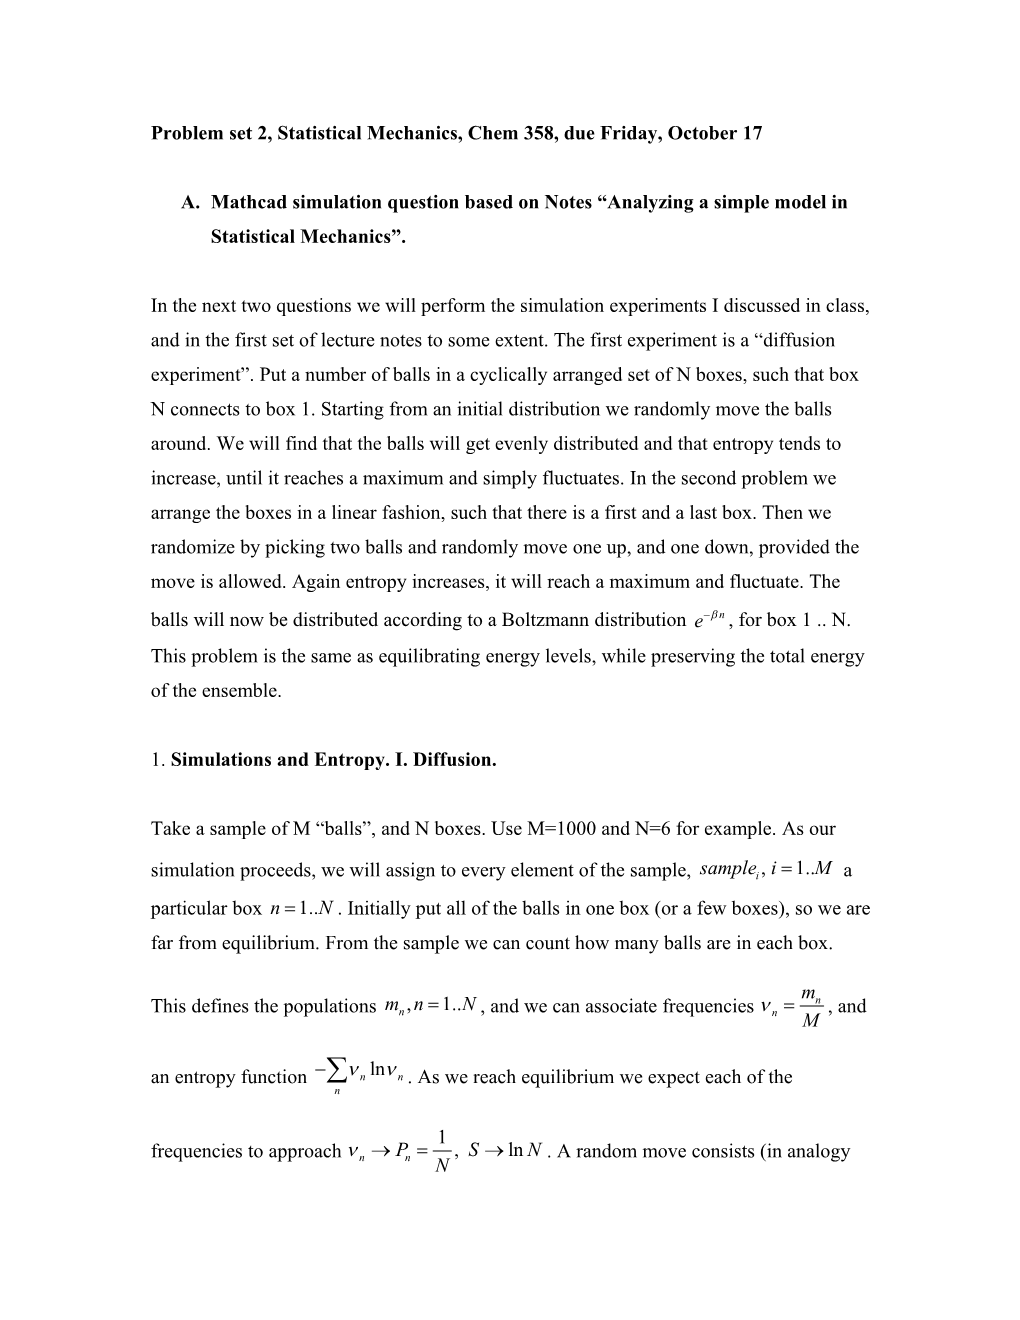 Problem Set 2 Statistical Mechanics, Chem 358, Due October 27